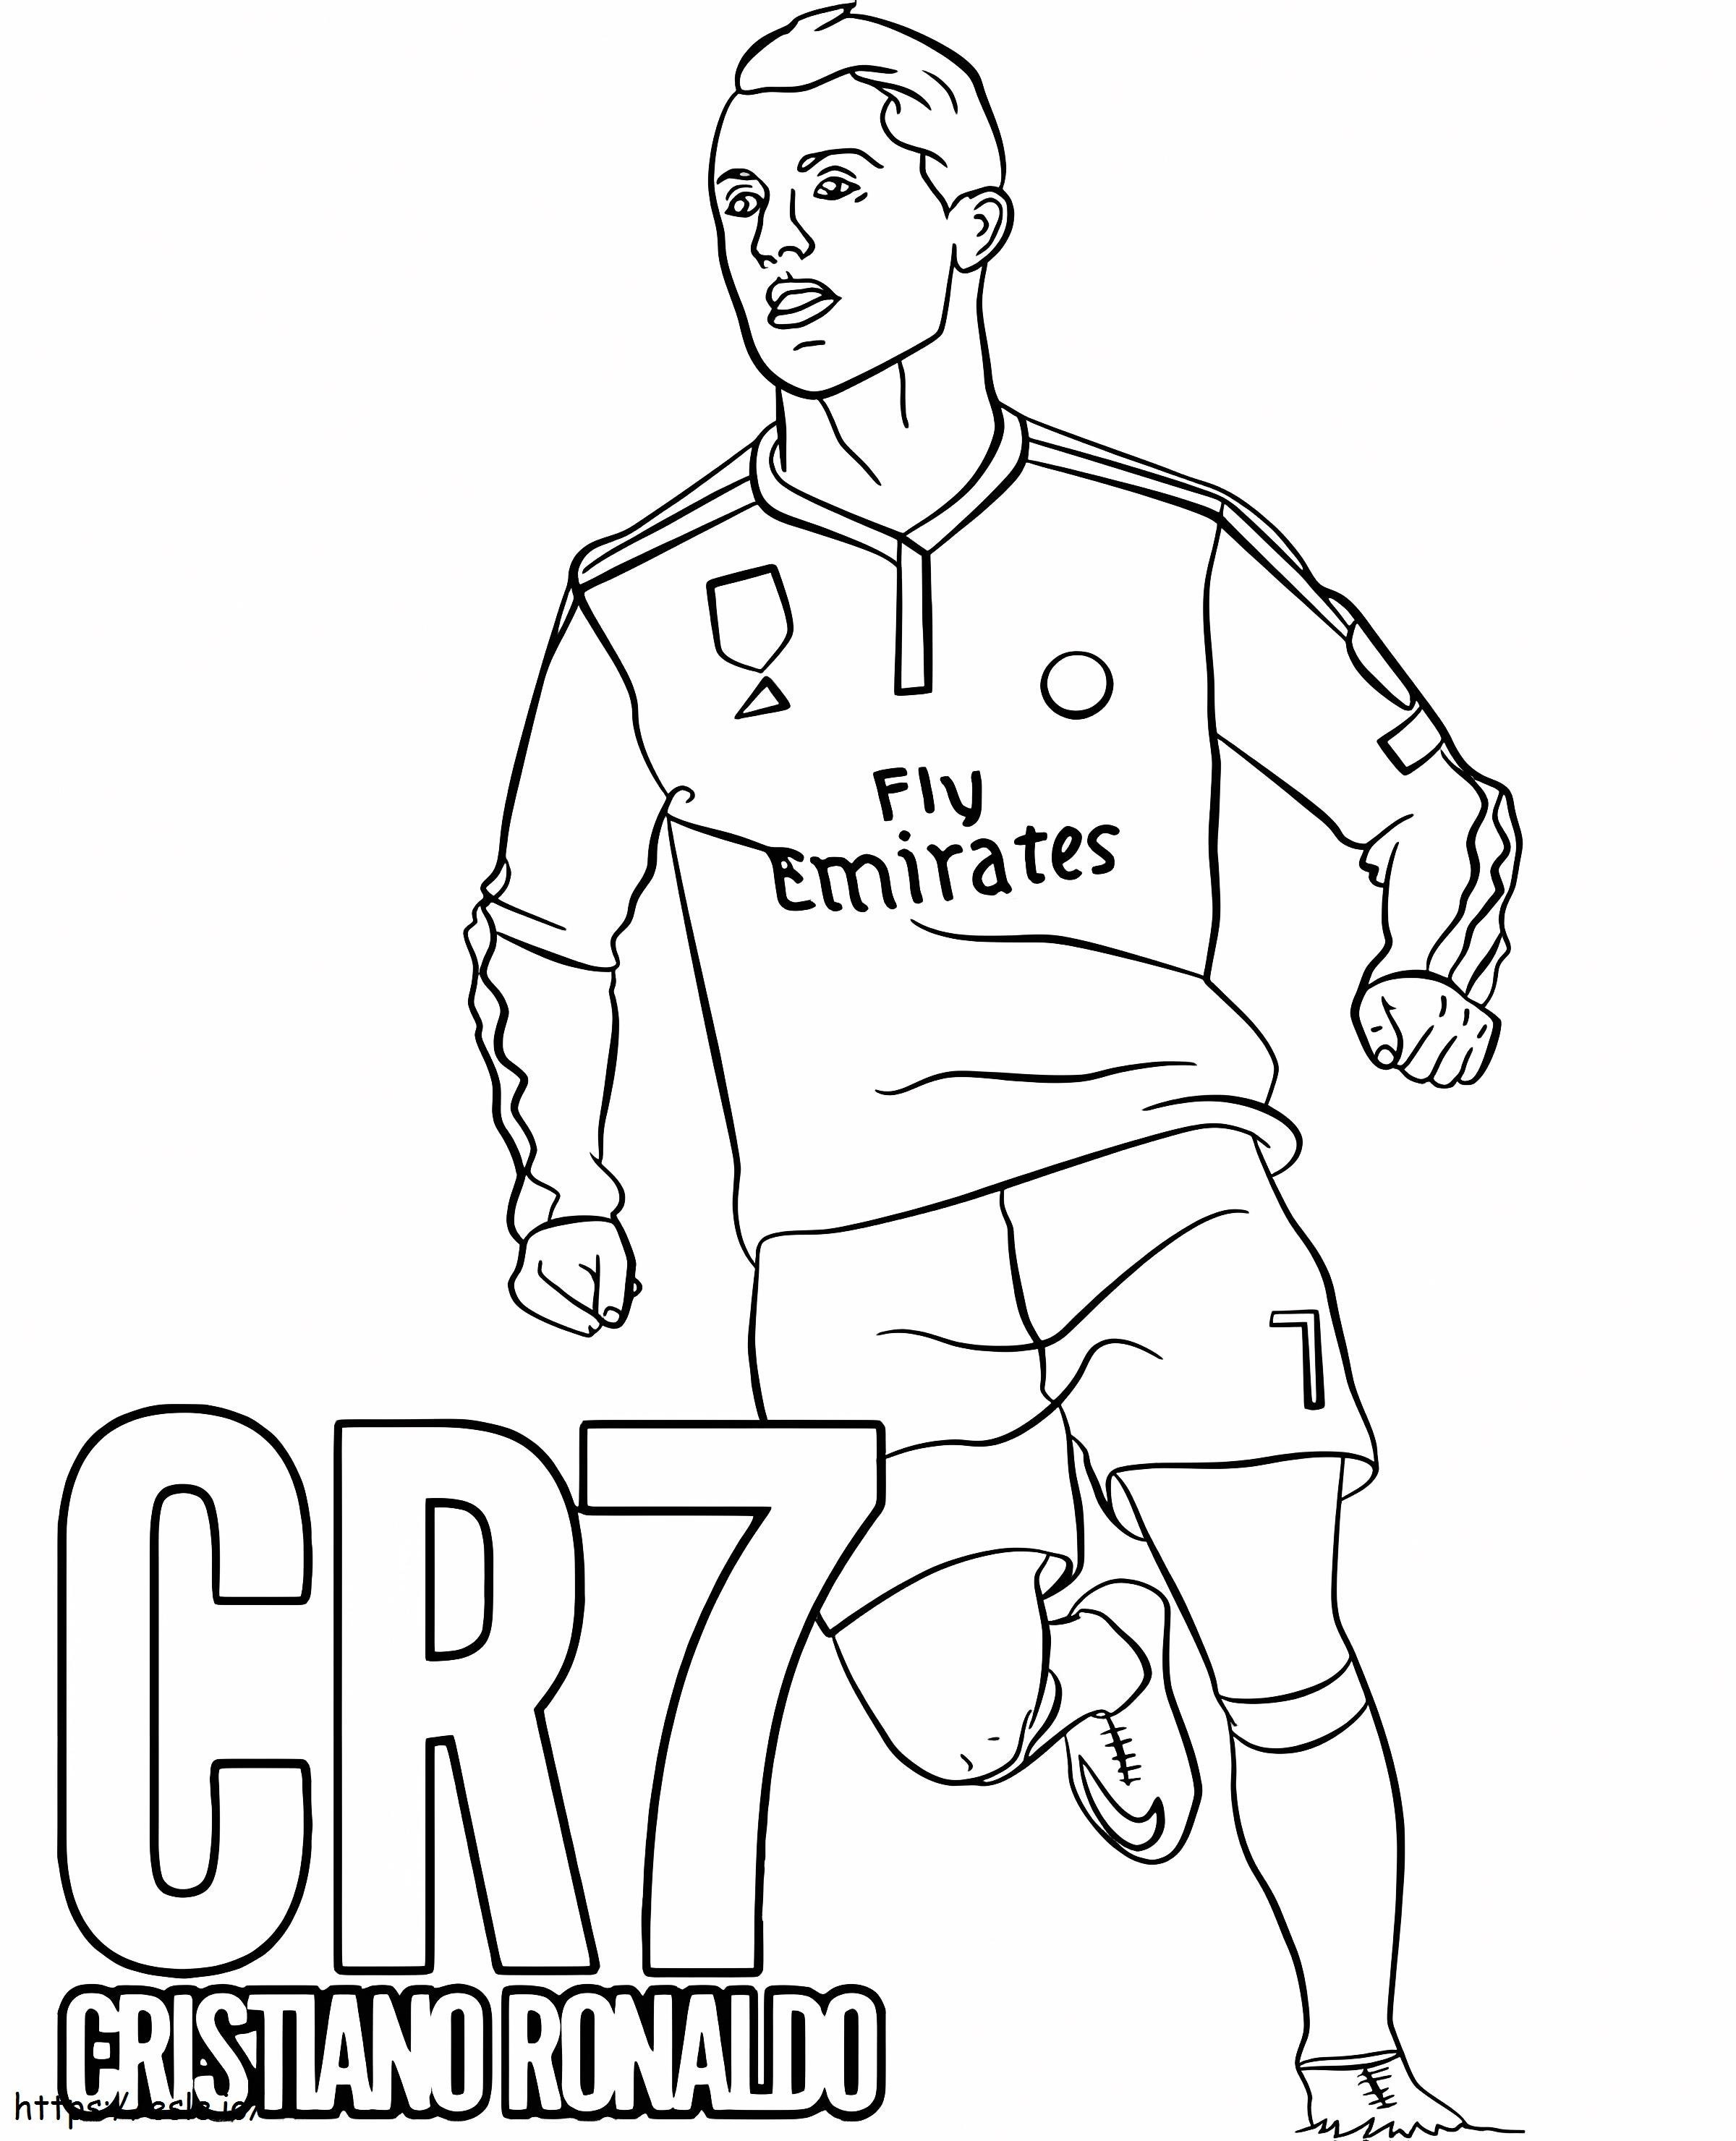 Cristiano Ronaldo-run kleurplaat kleurplaat